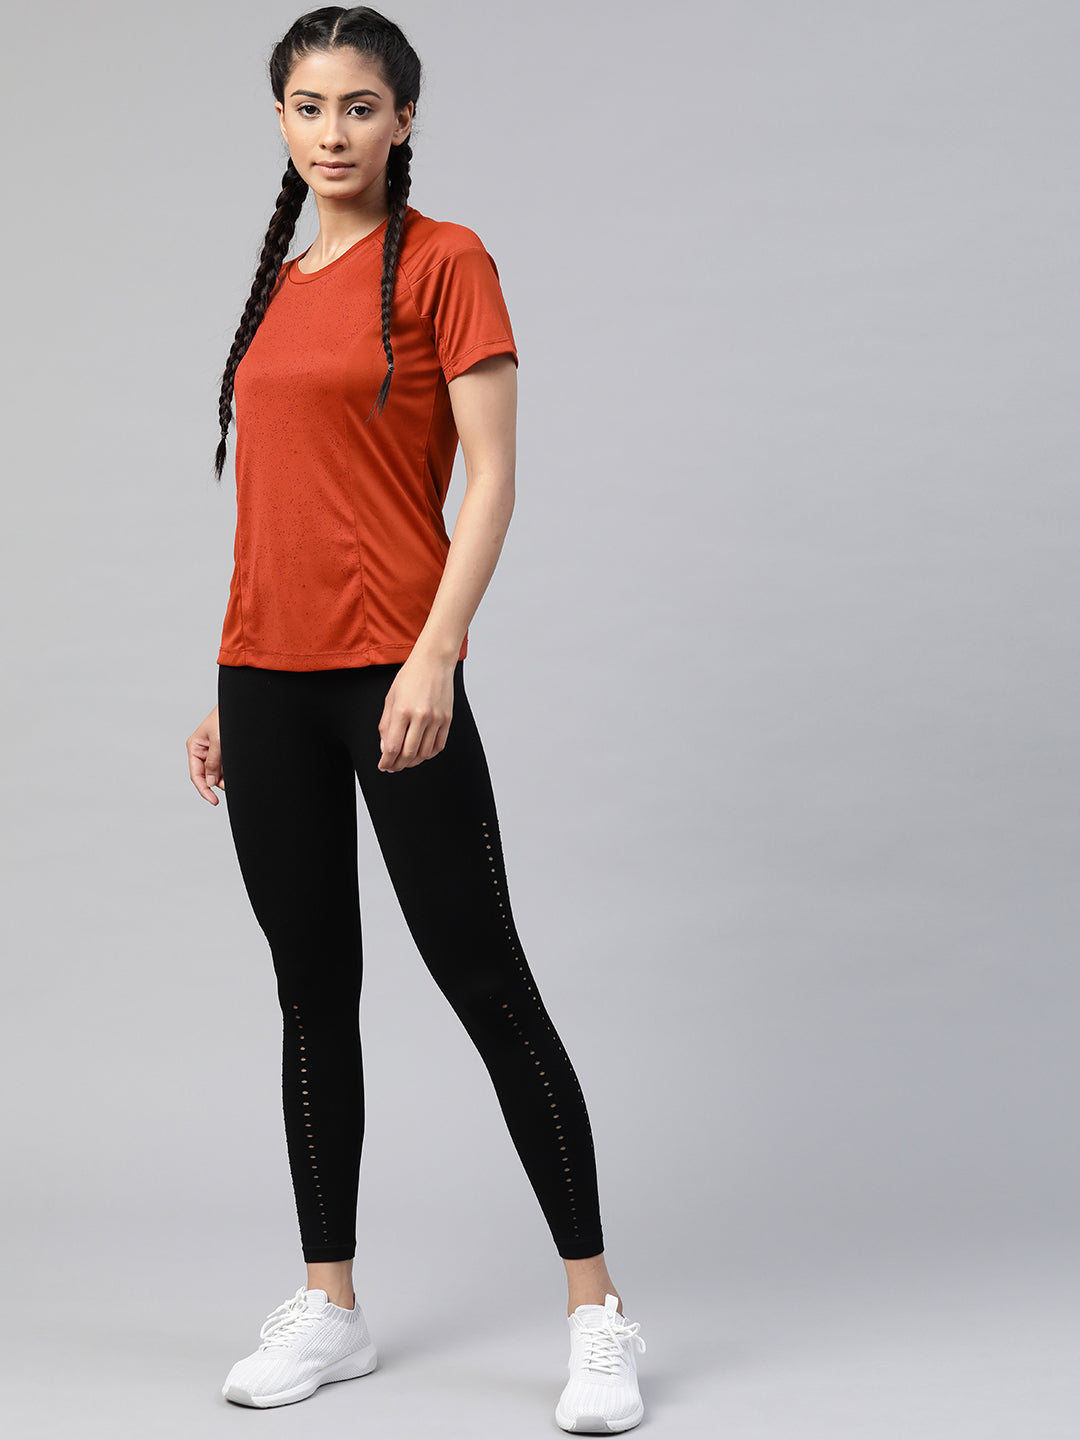 Alcis Women Rust Orange Printed Slim Fit Round Neck Tennis T-shirt